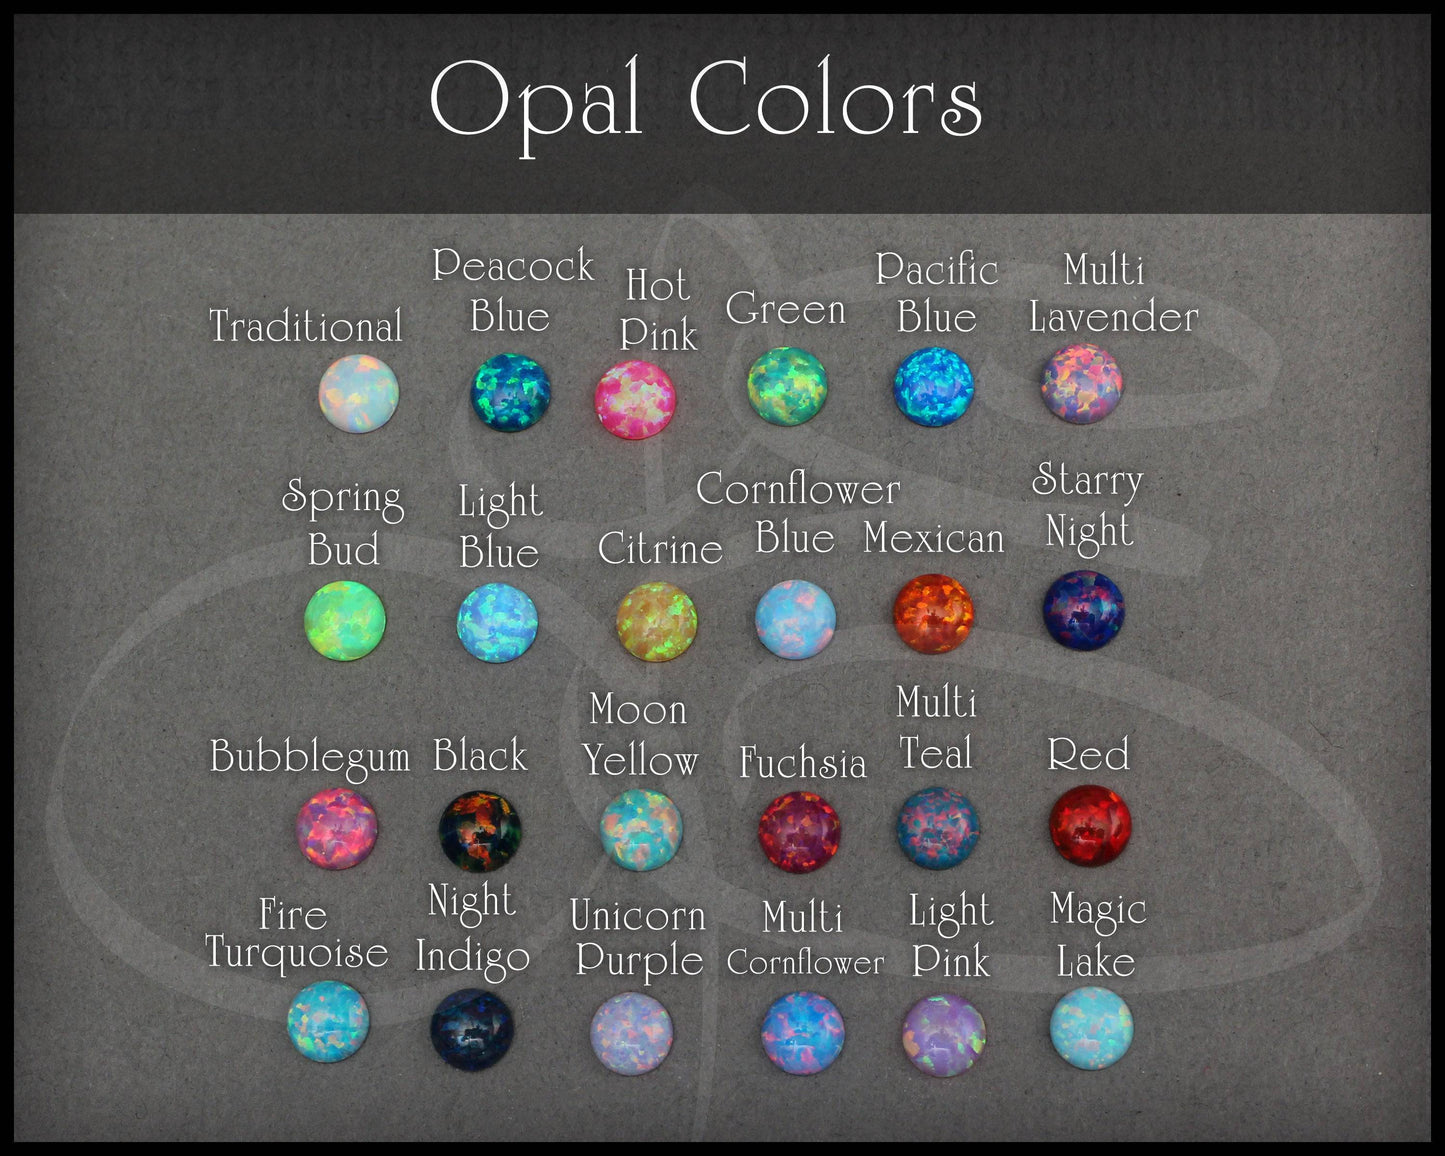 Silver Opal Necklace (choose color) - LE Jewelry Designs